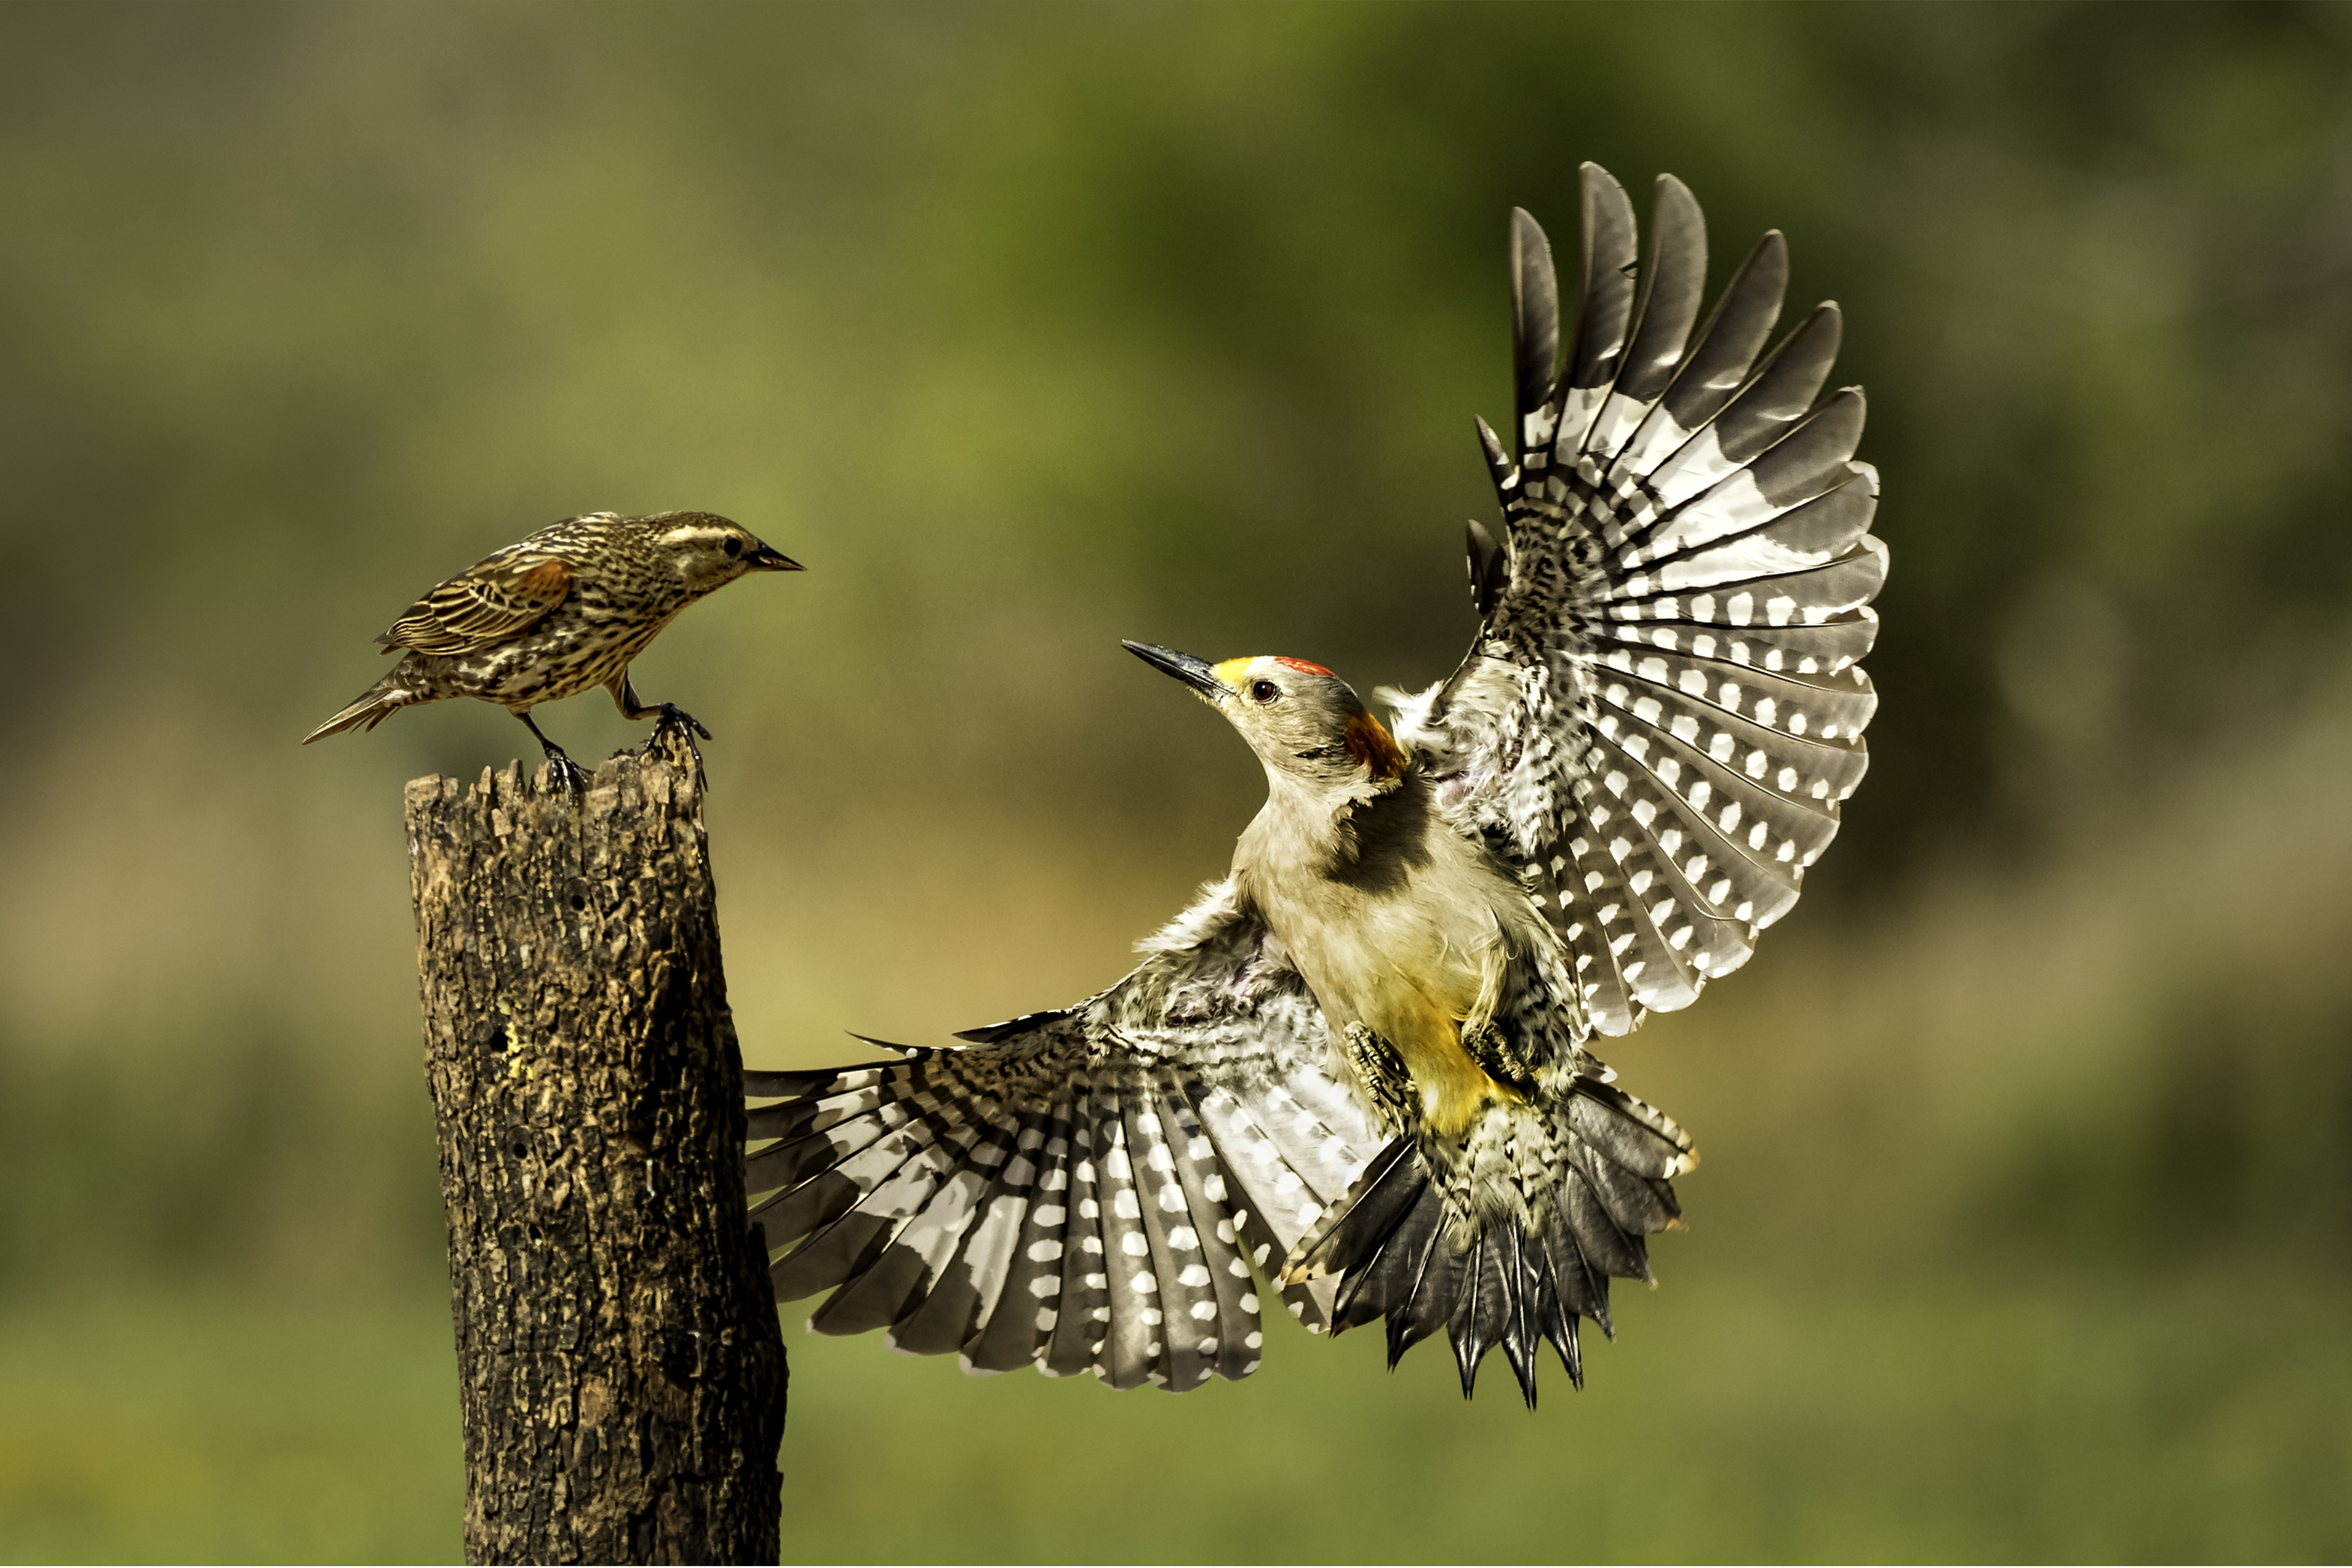 Woodpecker confrontation